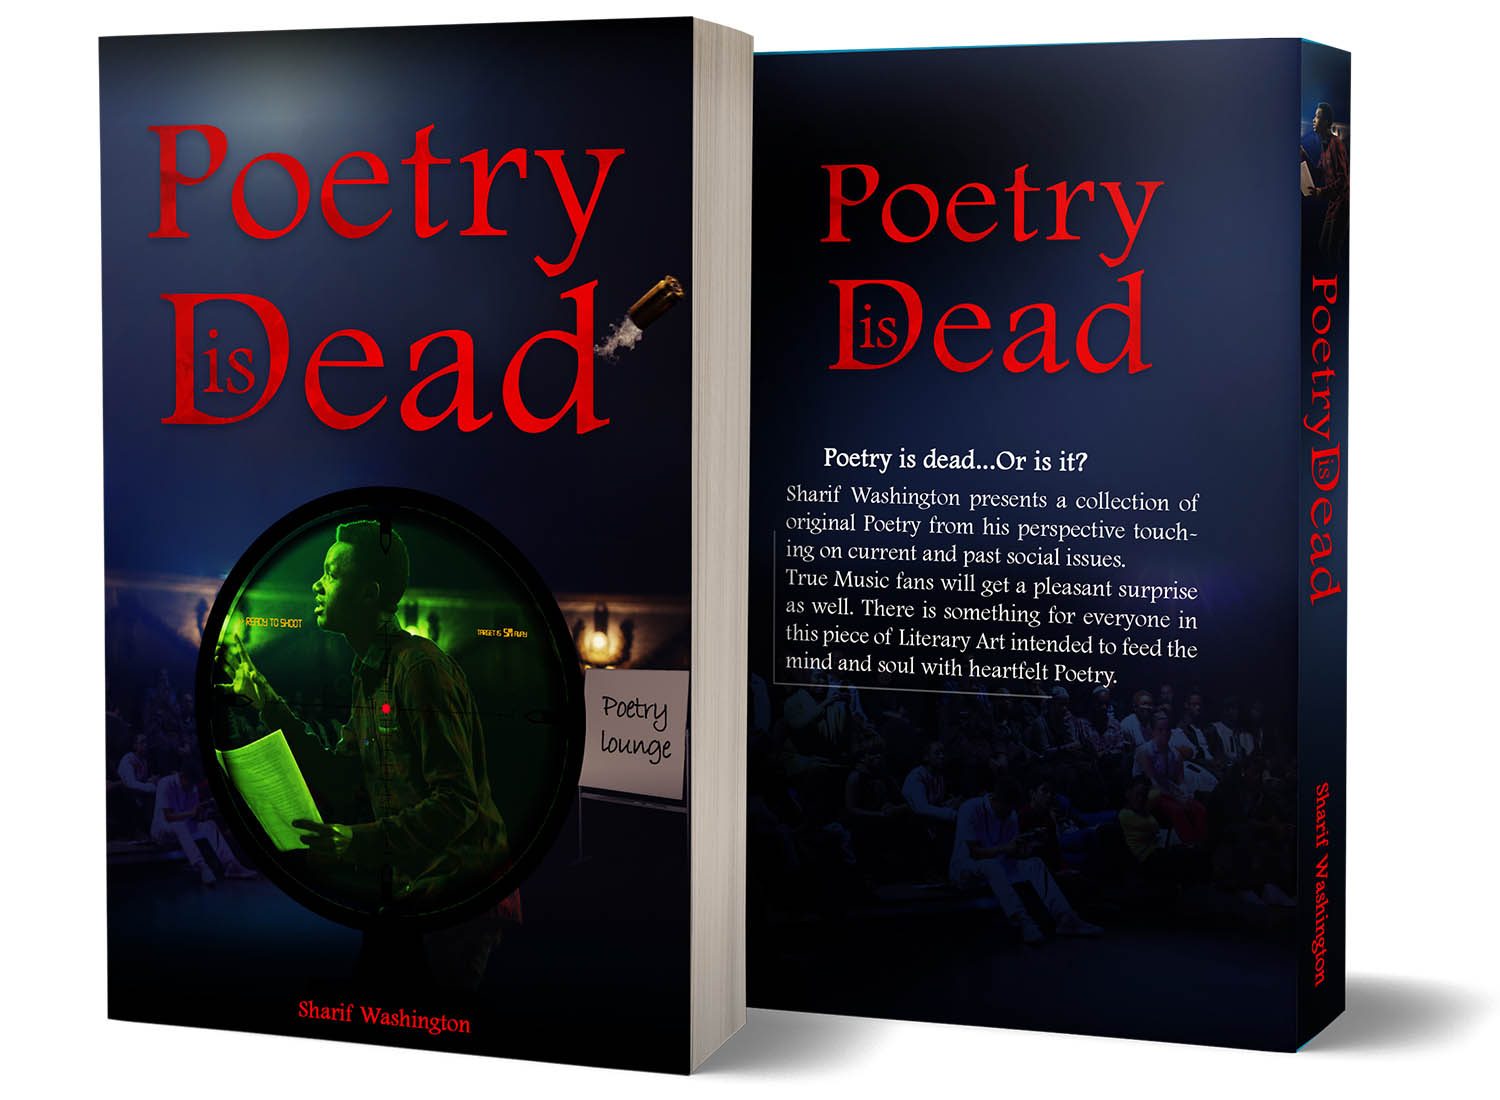 mrismailben-portfolio-Poetry is dead -paperback-bookcoverdesign